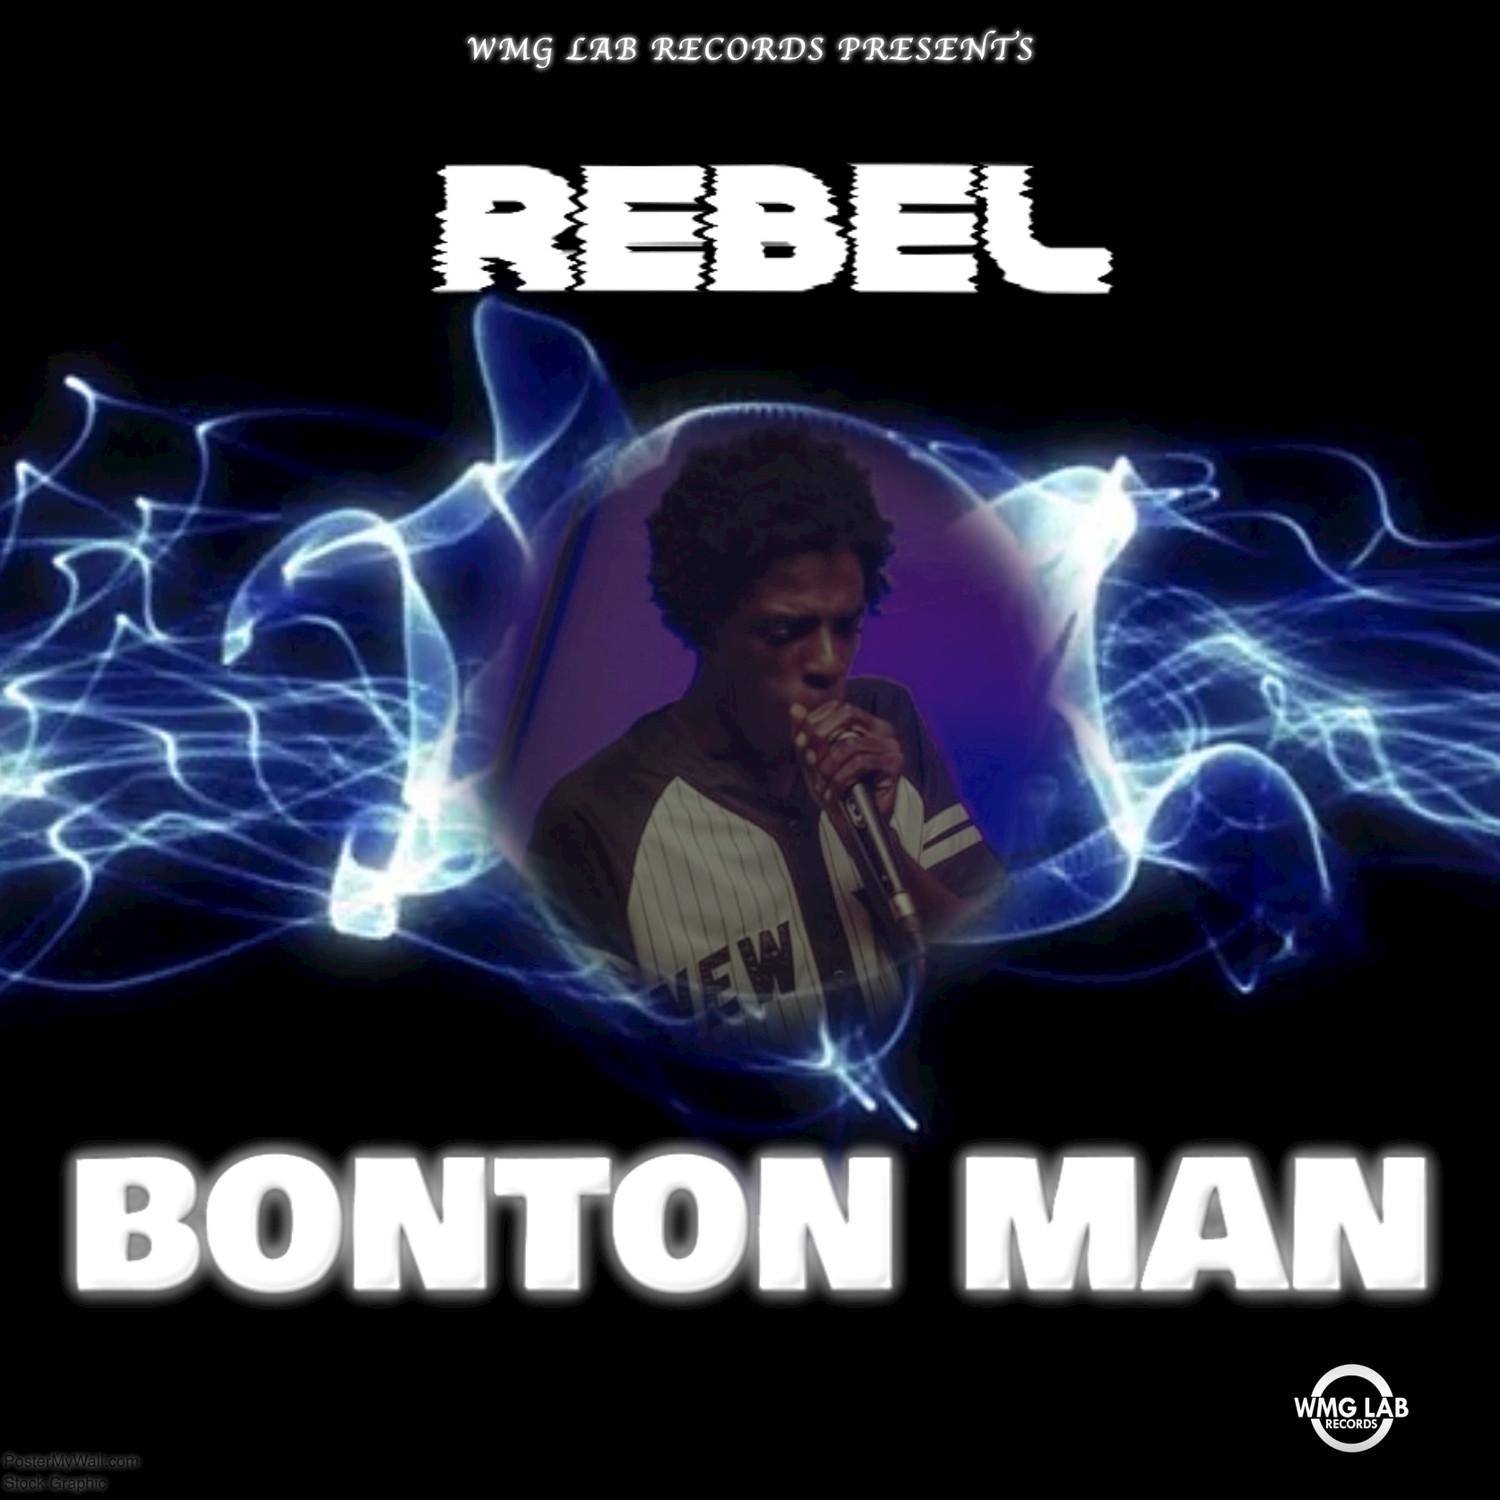 Bonton Man